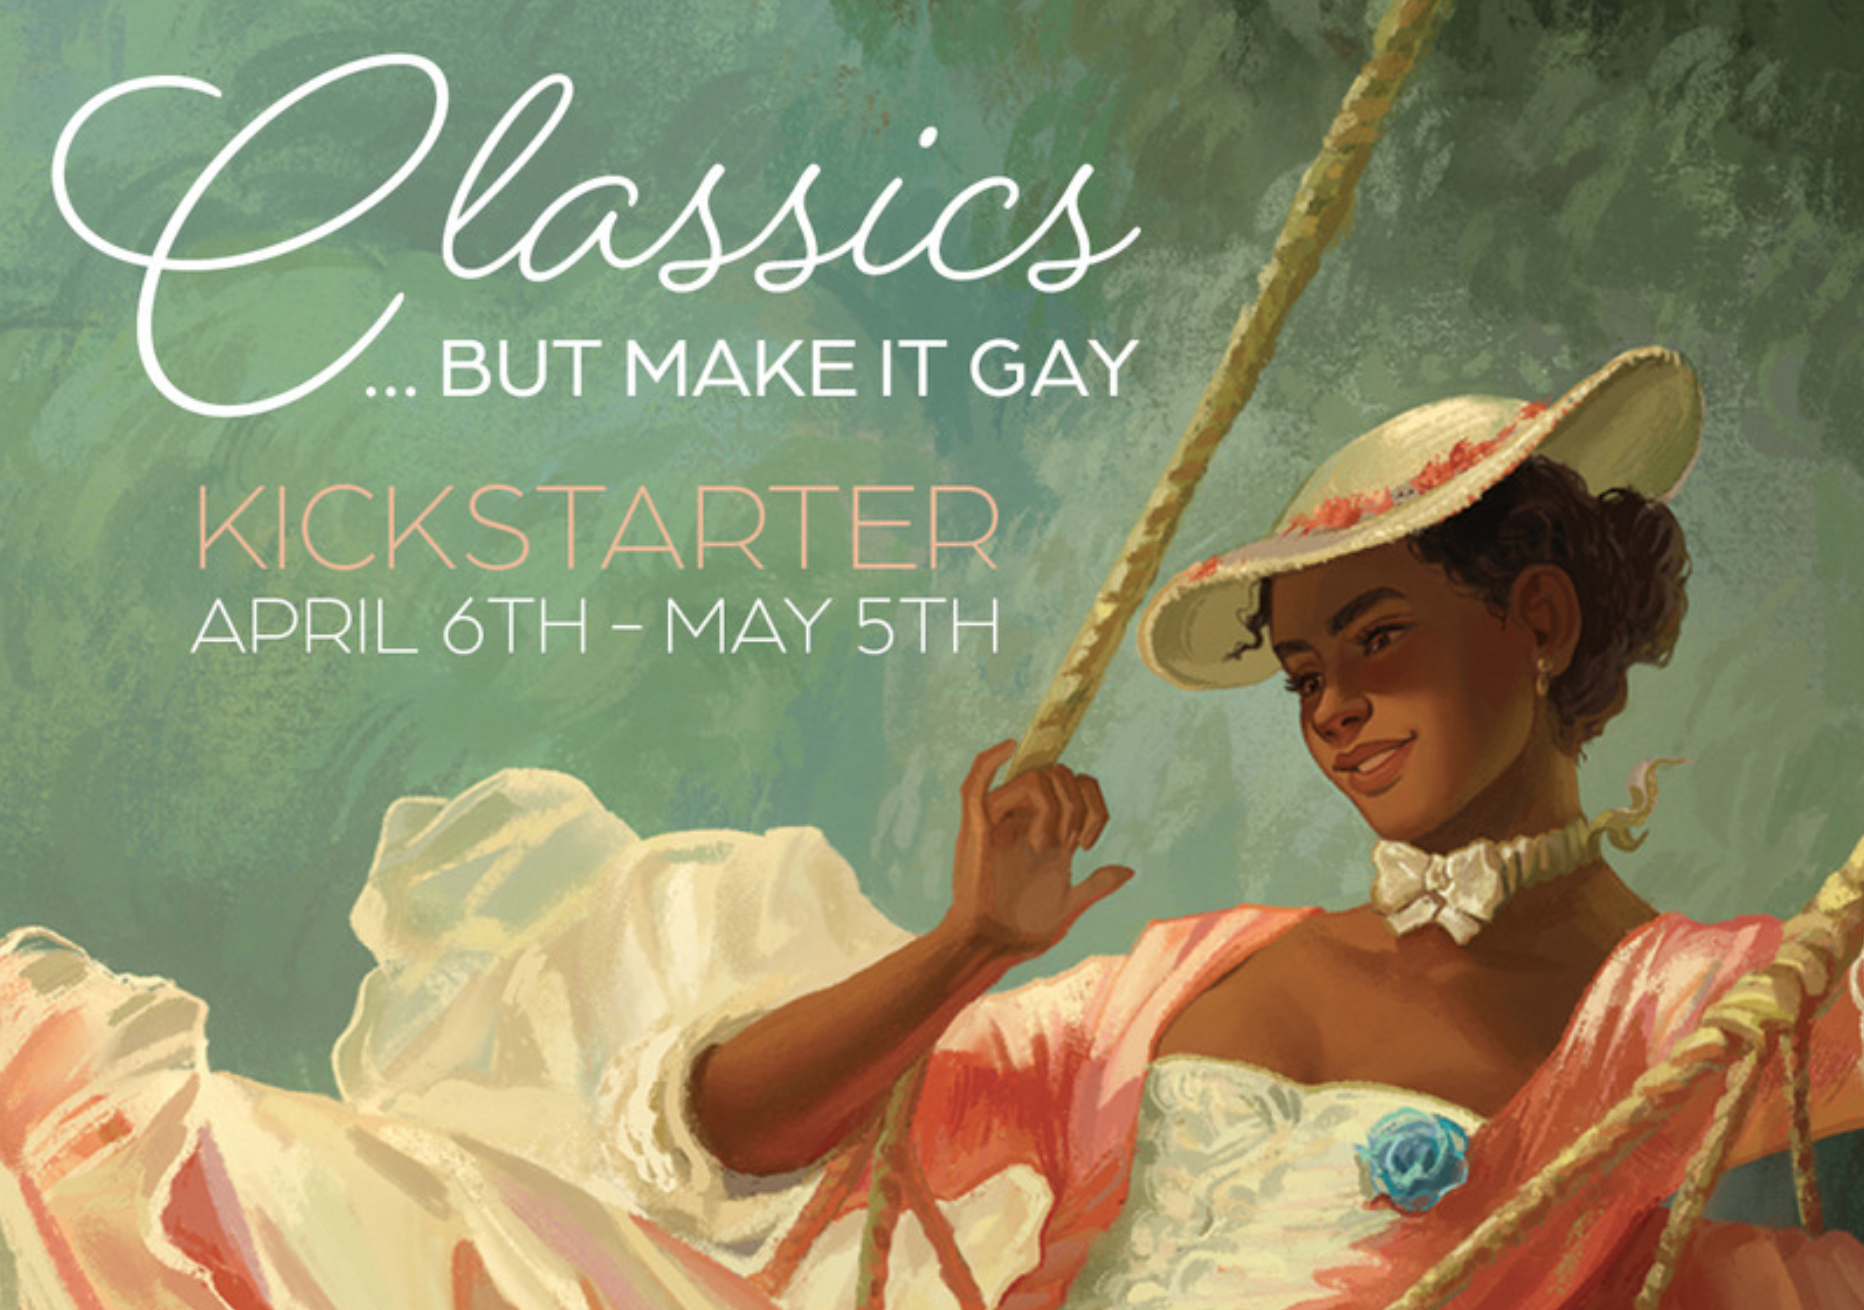 Queerly Not Straight: 'Classics...But Make It Gay' LGBTQ+ Kickstarter